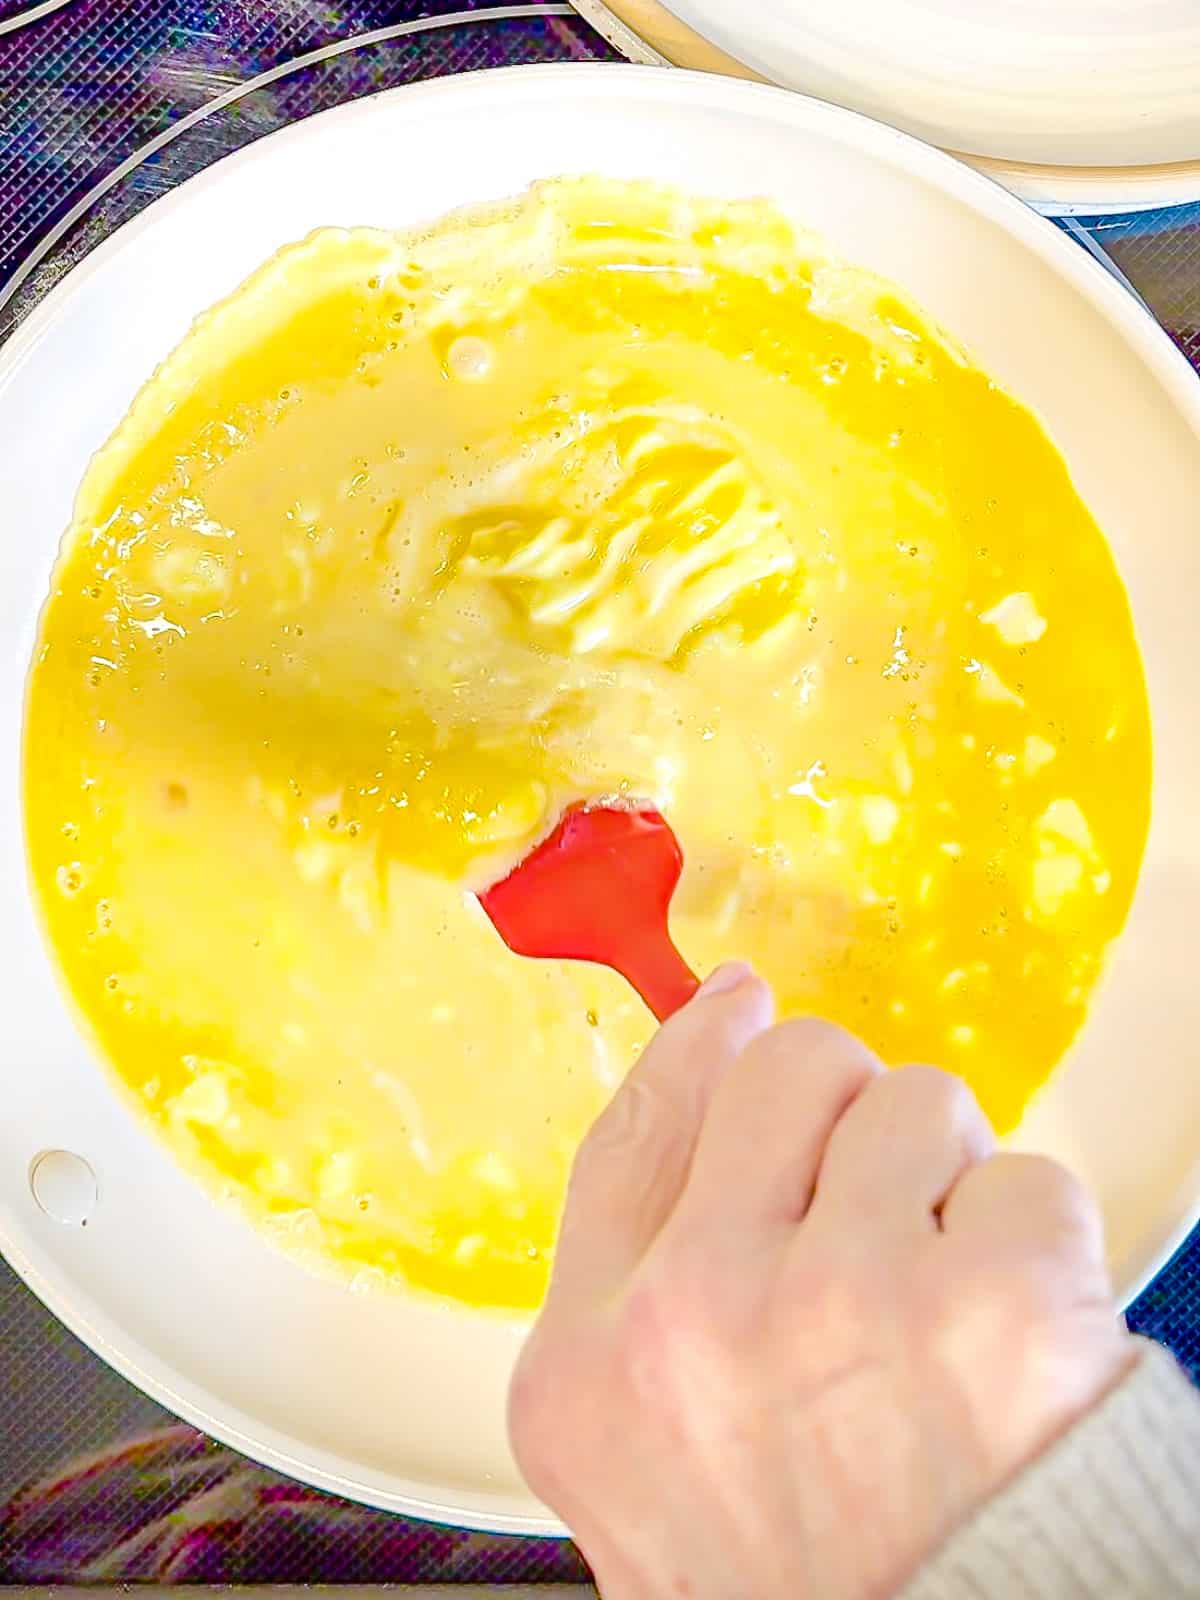 Scrambling eggs in a nonstick pan.